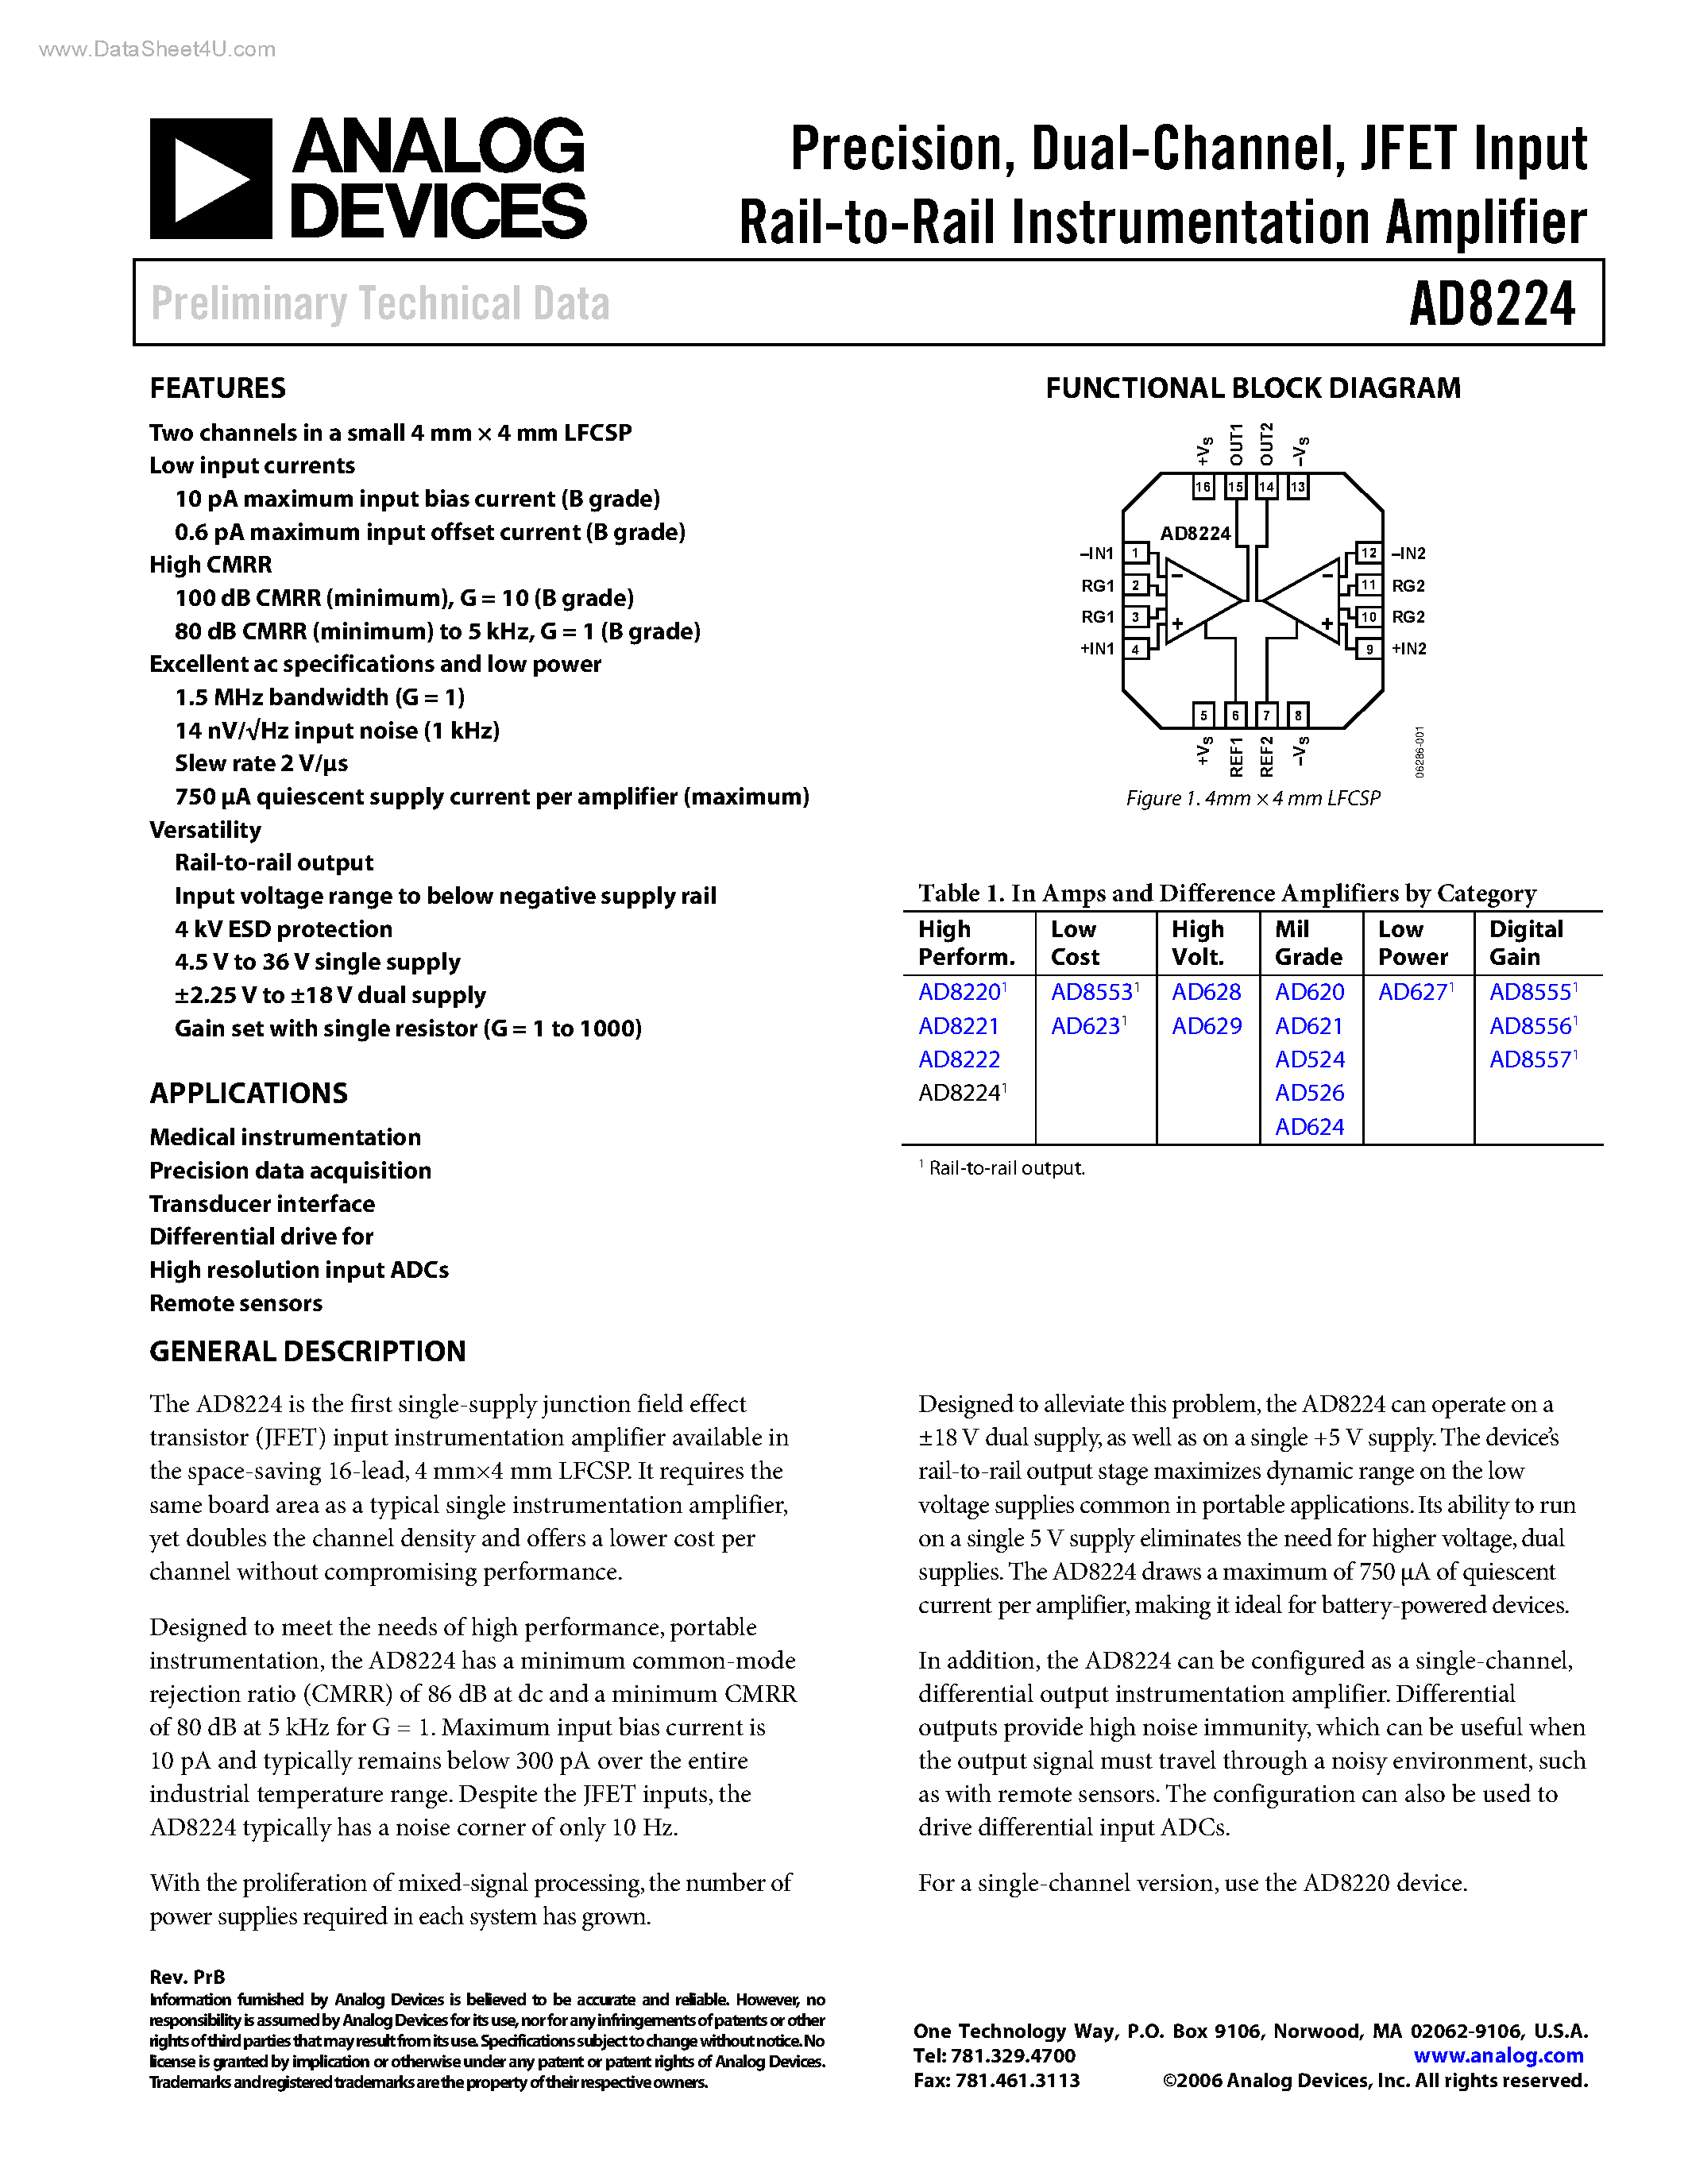 Даташит AD8224 - JFET Input Rail-to-Rail Instrumentation Amplifier страница 1